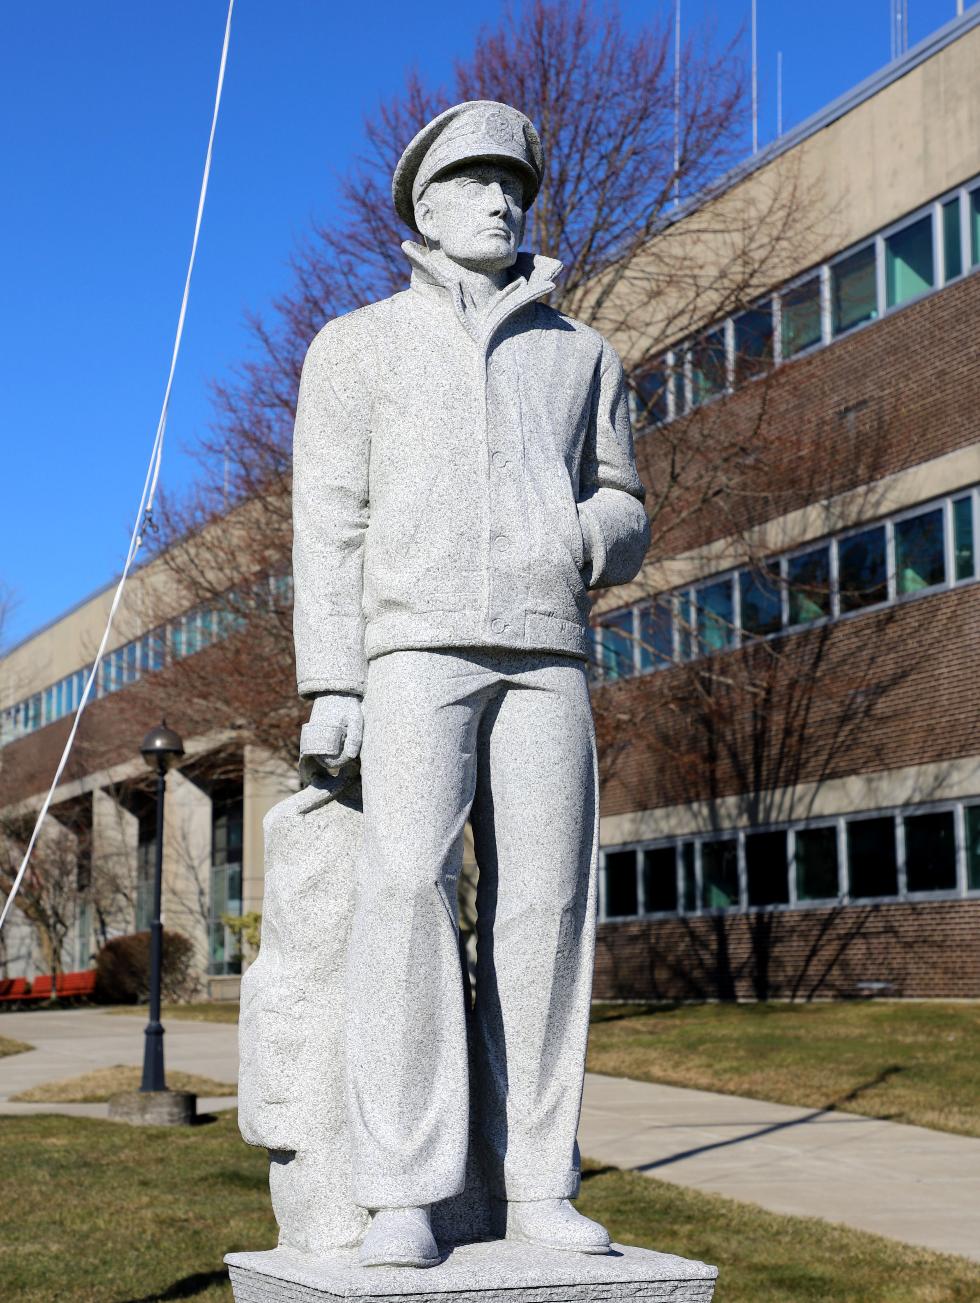 Merchant Marine Academy Unknown Seaman Memorial  - Bourne Massachusetts